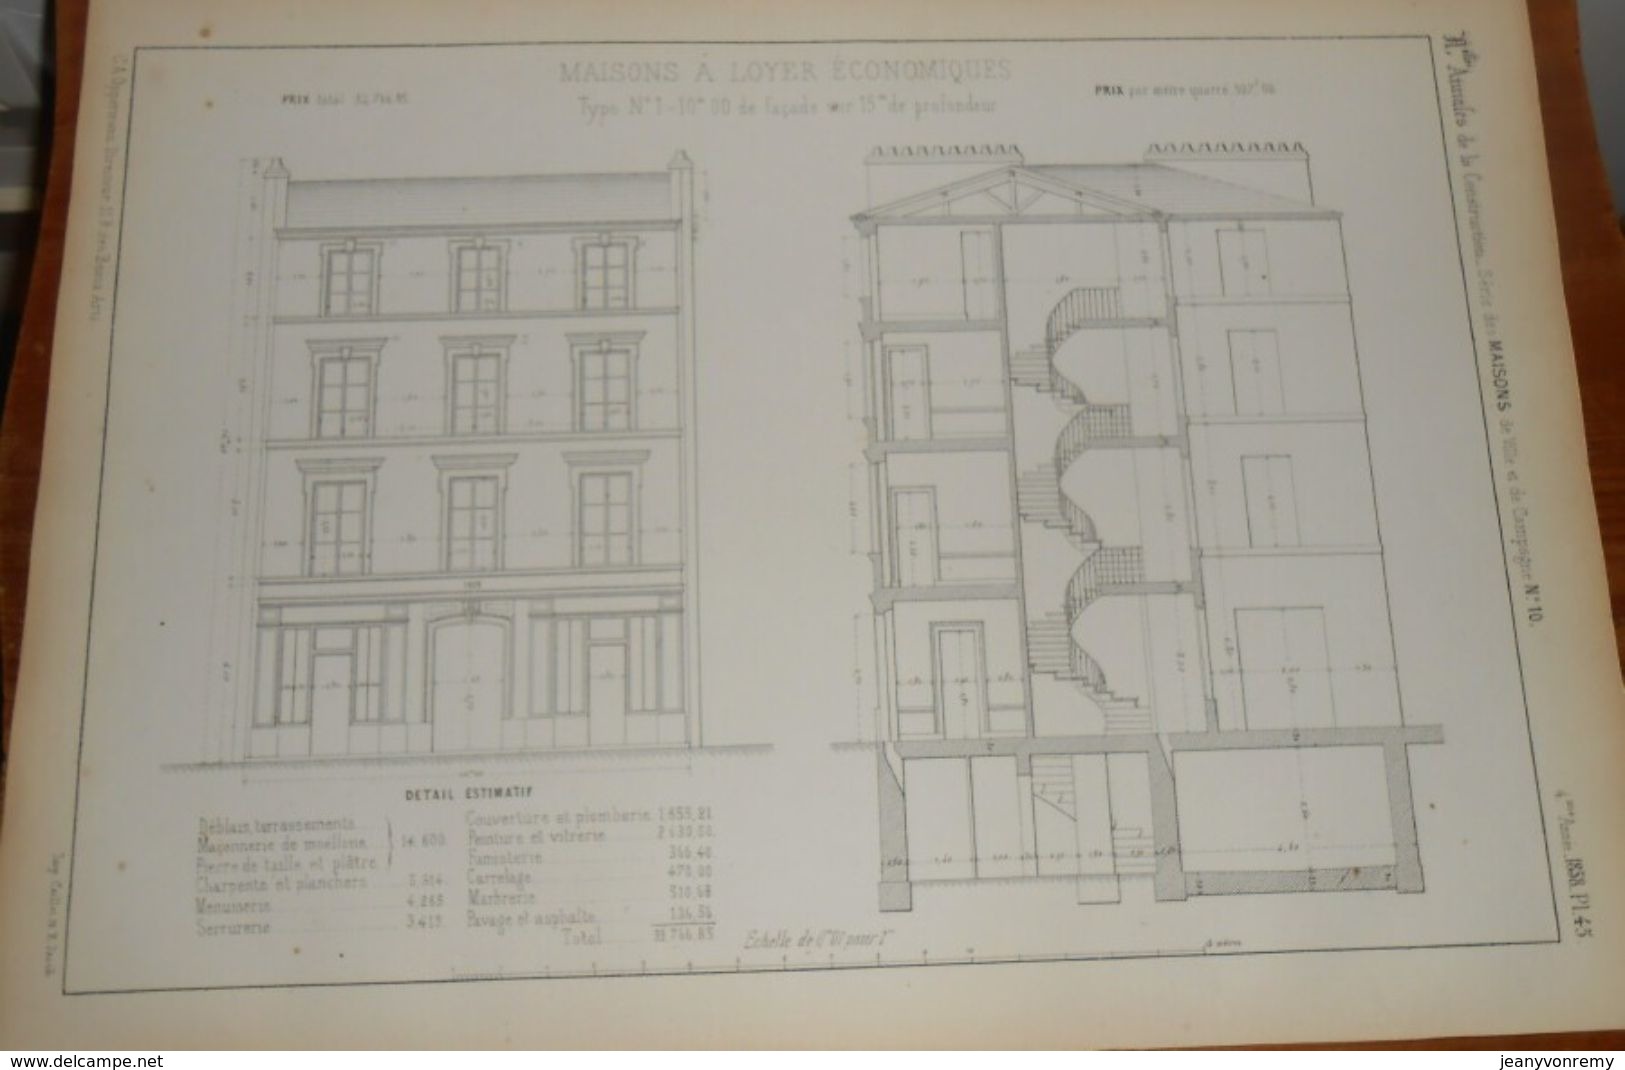 Plan De Maison à Loyer économique. 1858 - Arbeitsbeschaffung